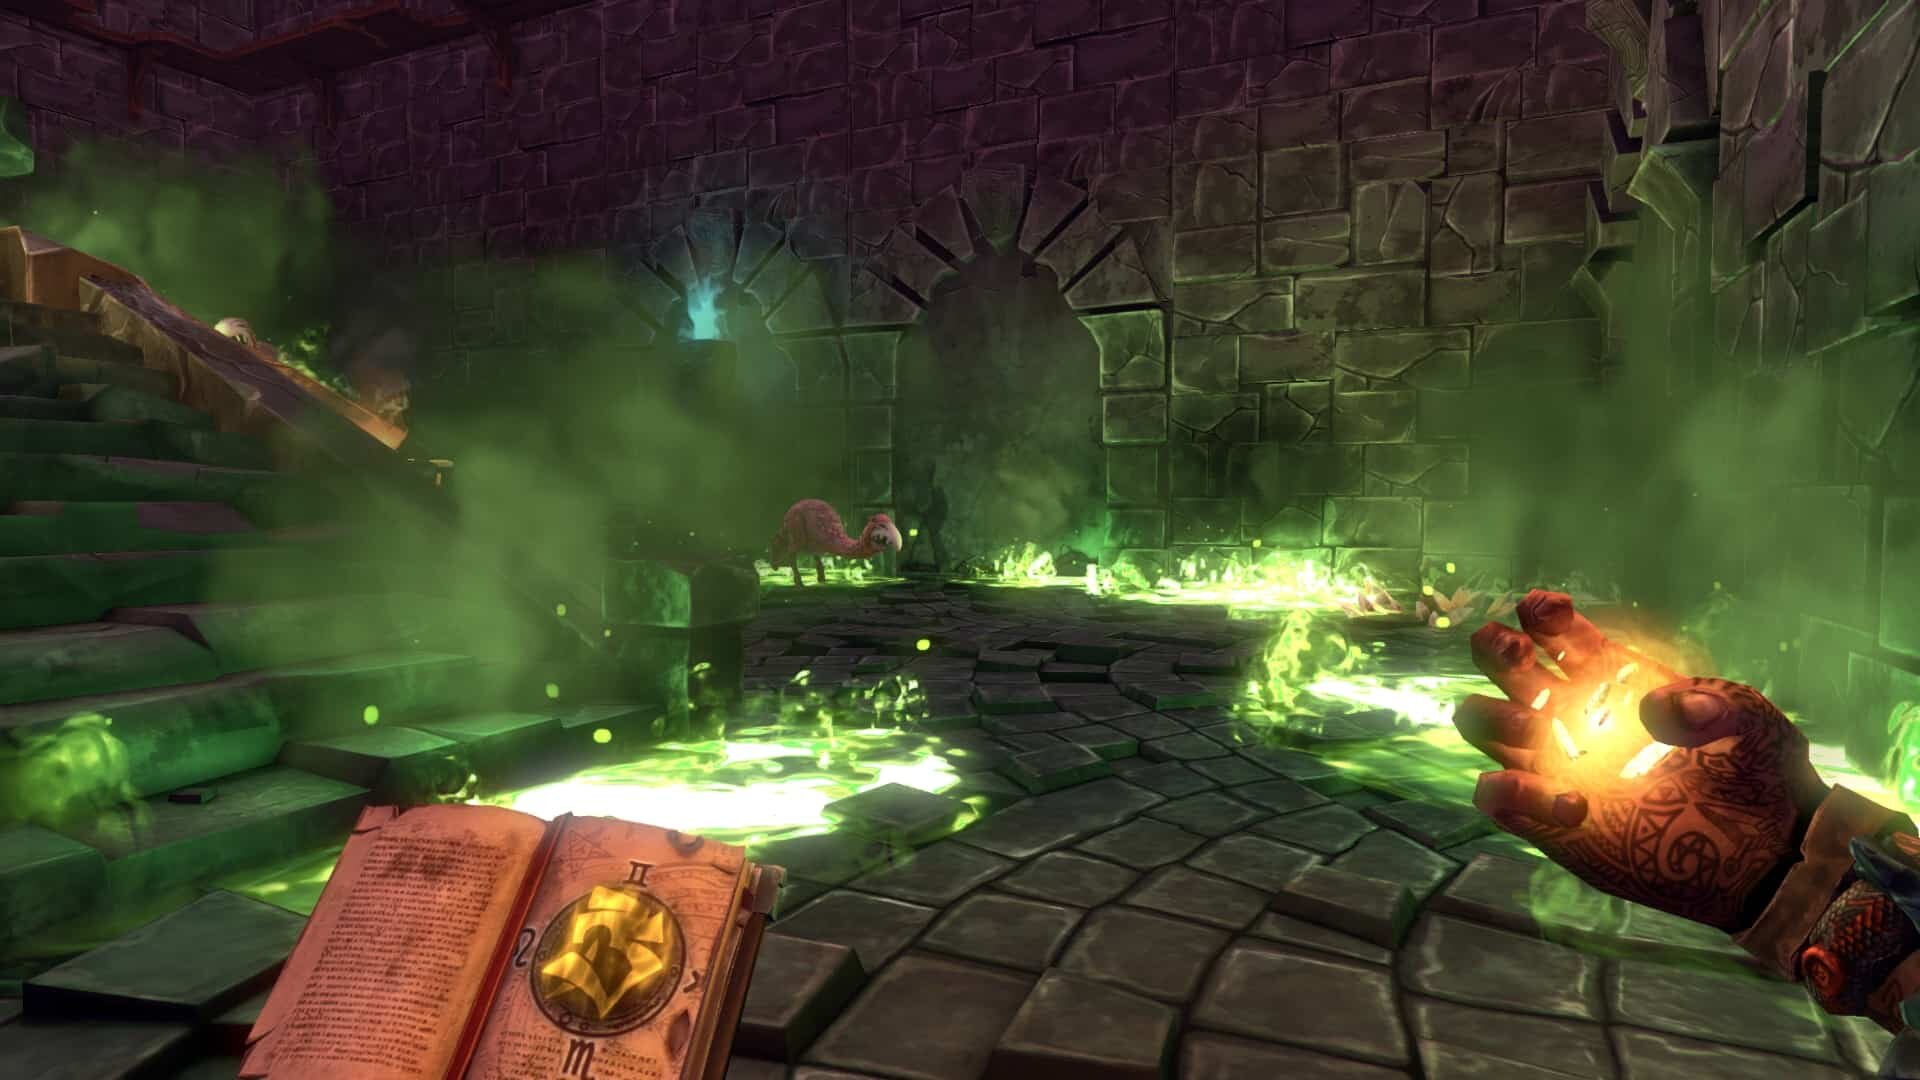 Ziggurat game screenshot courtesy of Steam